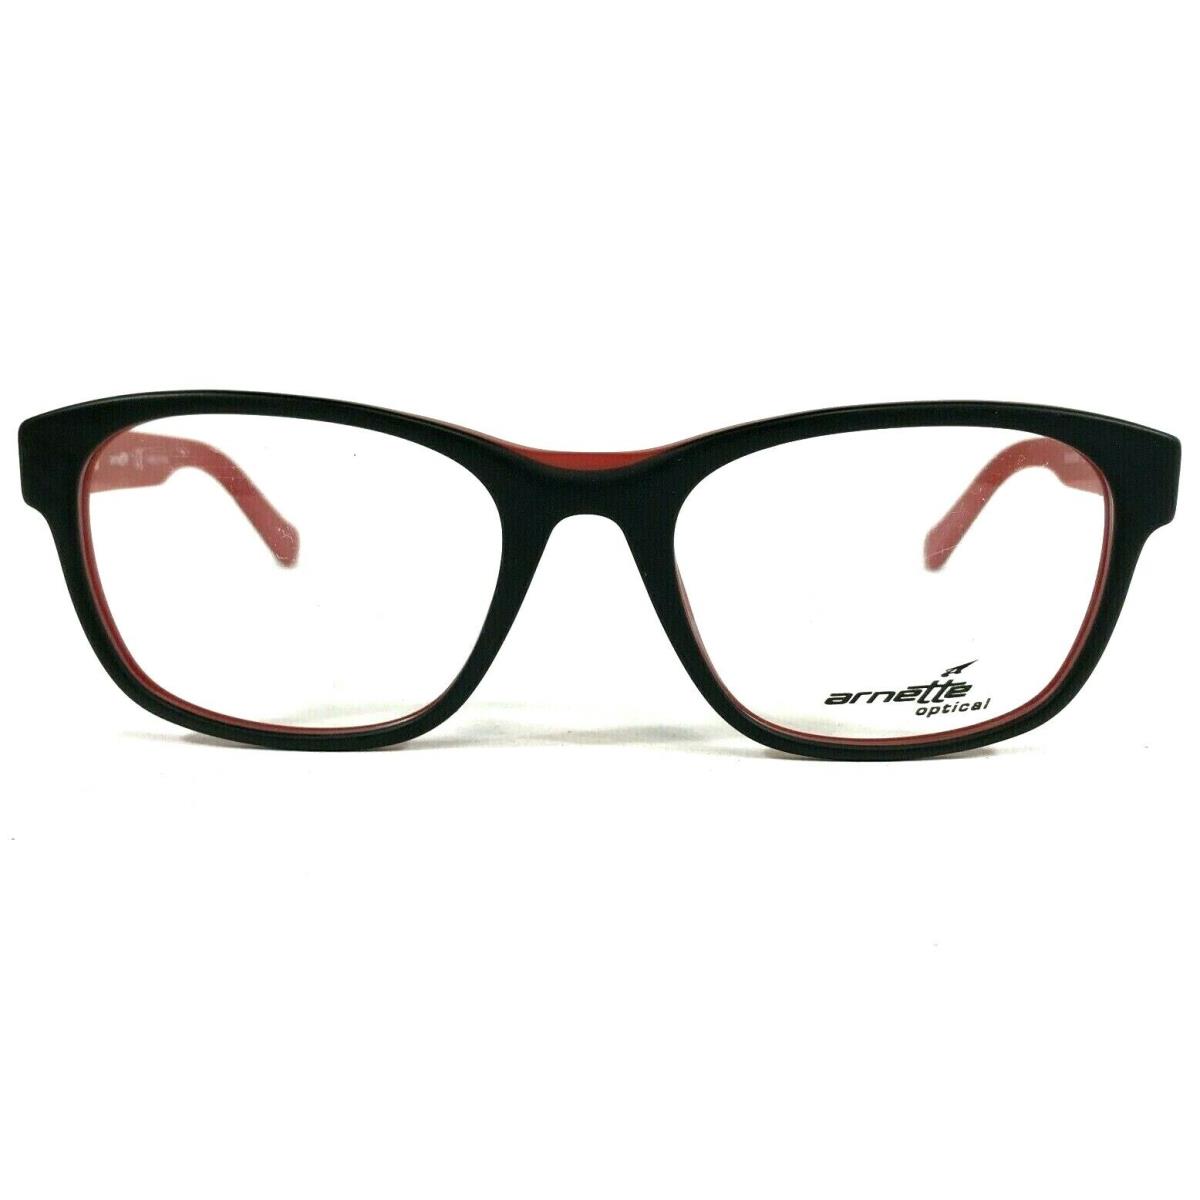 Arnette Eyeglasses Frames Selector 7081 1135 Black Red Round 52-19-140